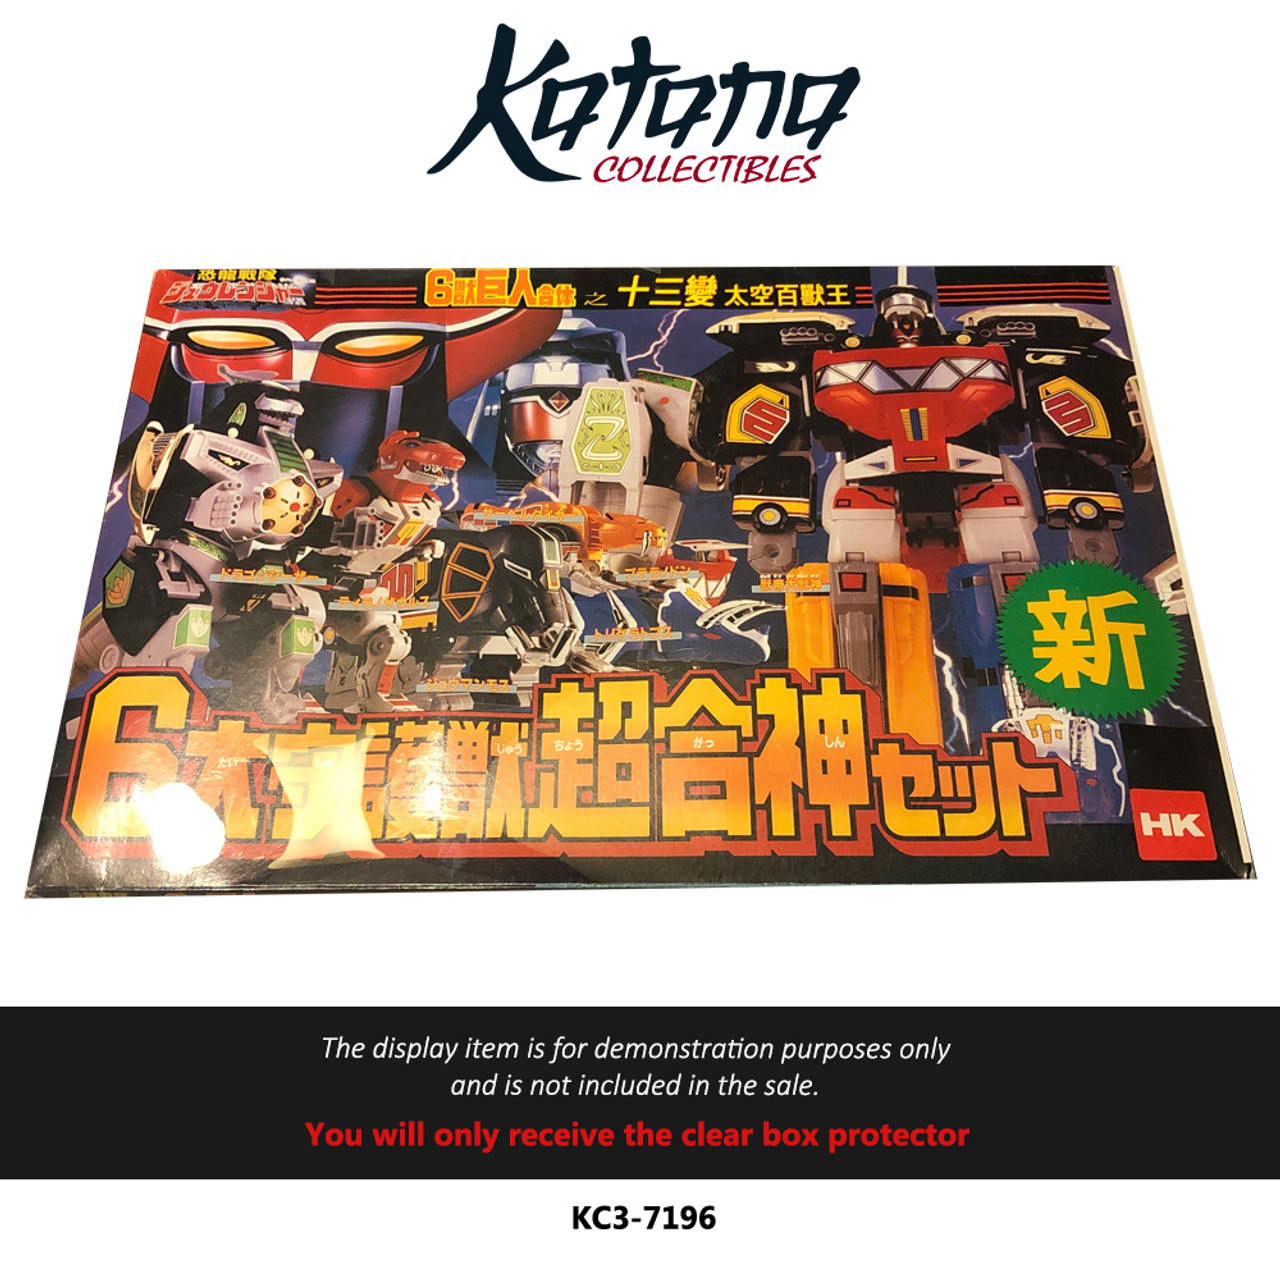 Katana Collectibles Protector For Taiwan Zyuranger Gift Box Set